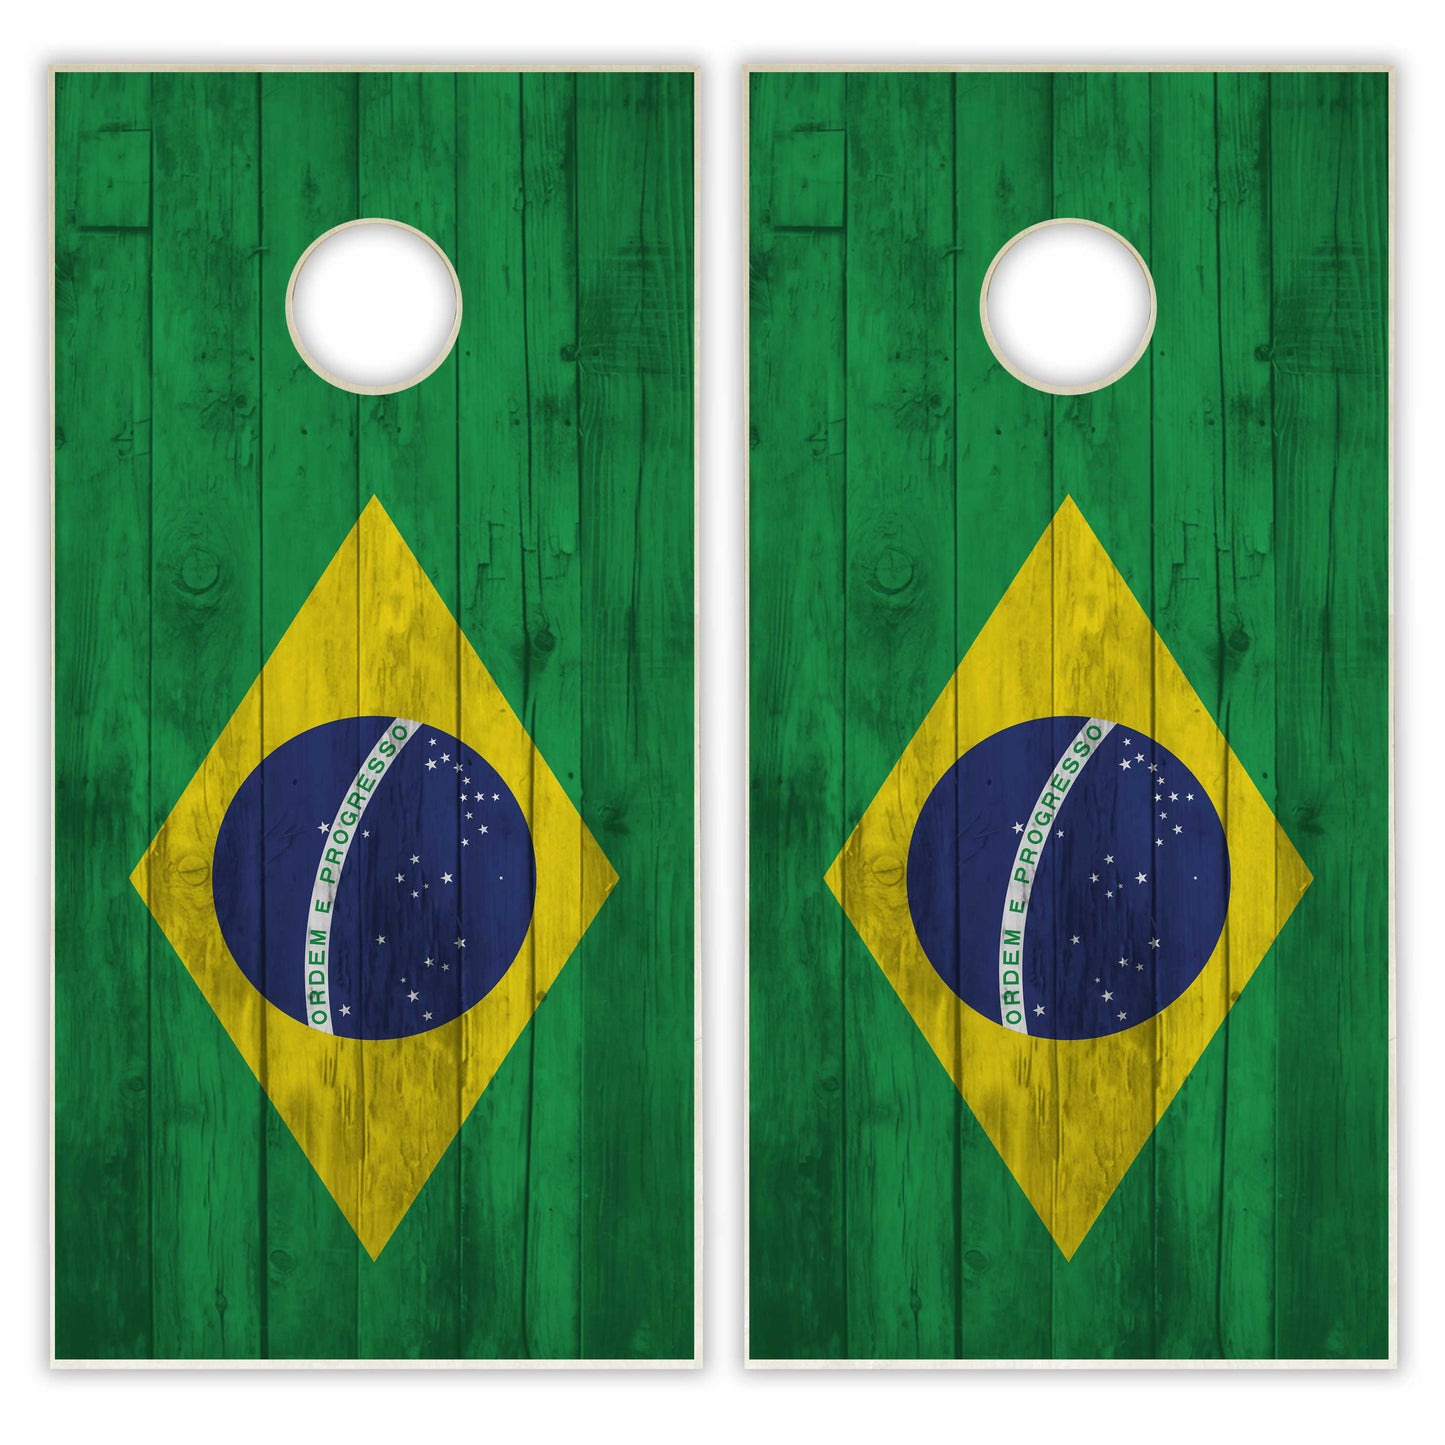 Brazil Flag Cornhole Set - Distressed Wood